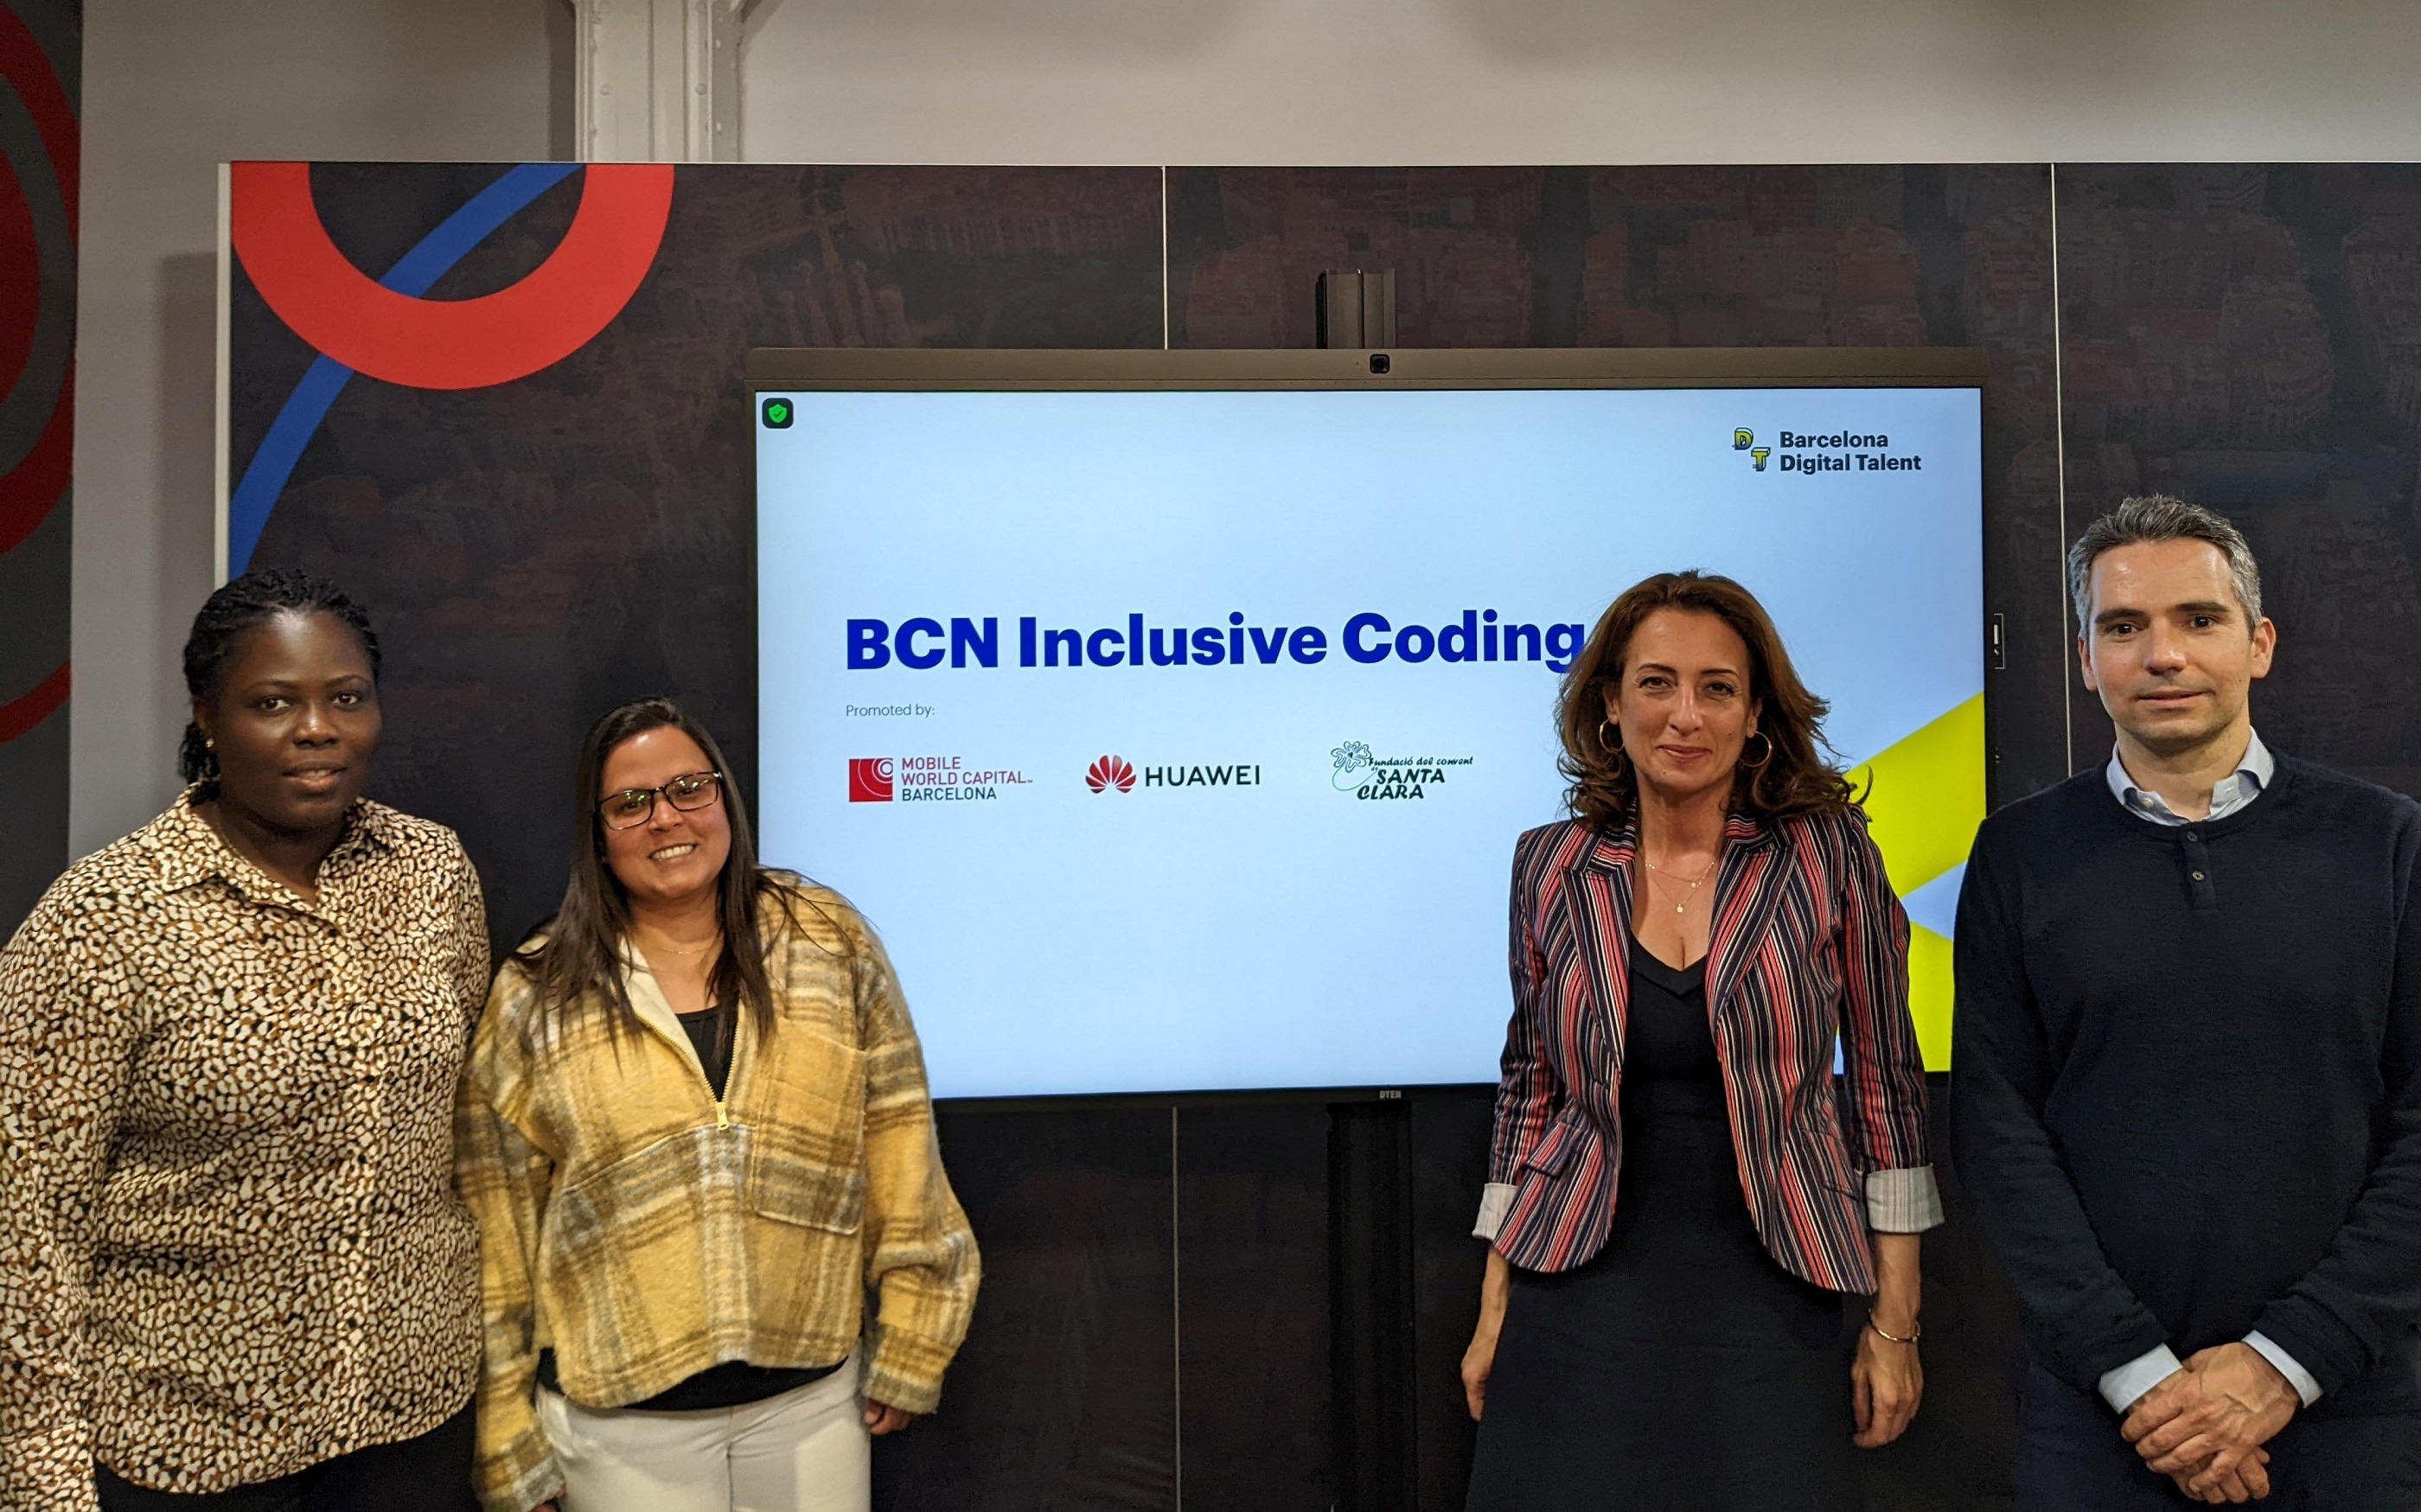 NDP BCN Inclusive Coding